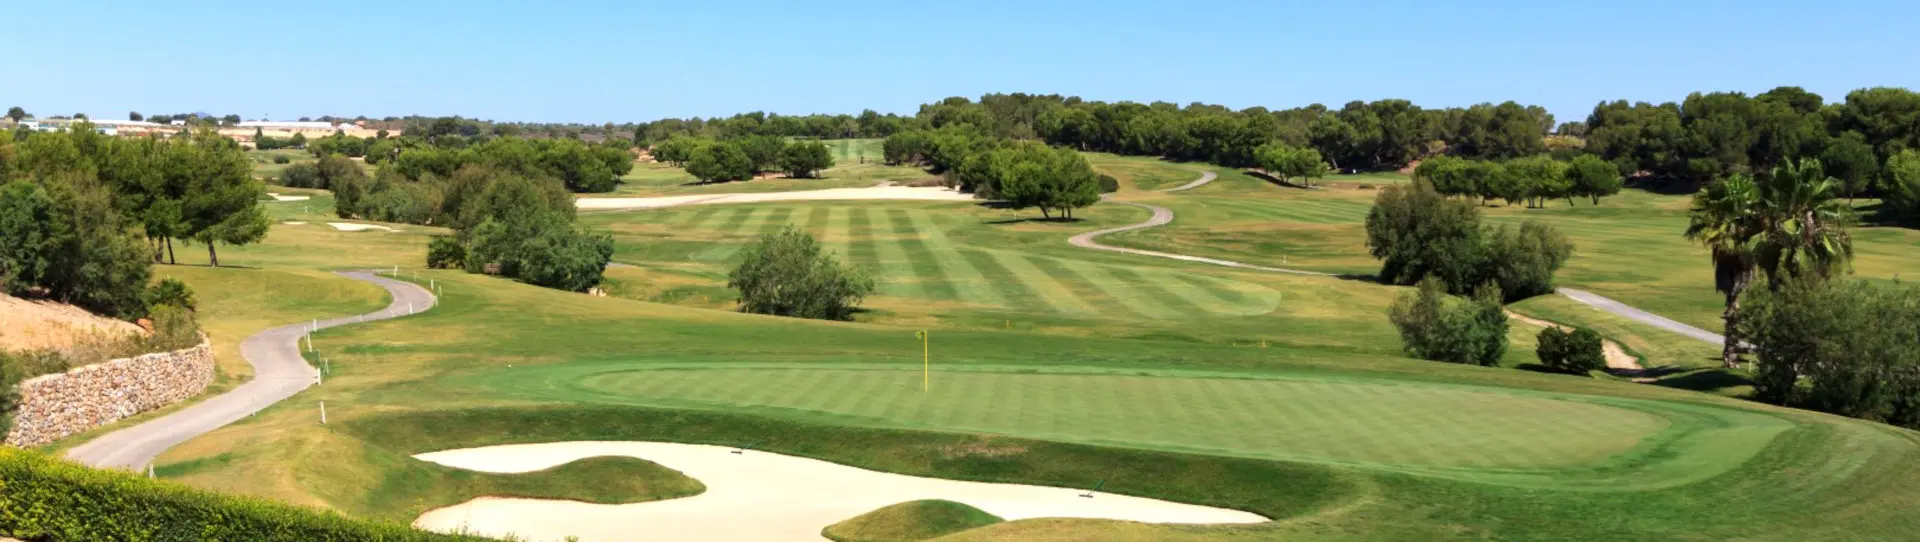 Spain golf courses - Lo Romero Golf - Photo 3